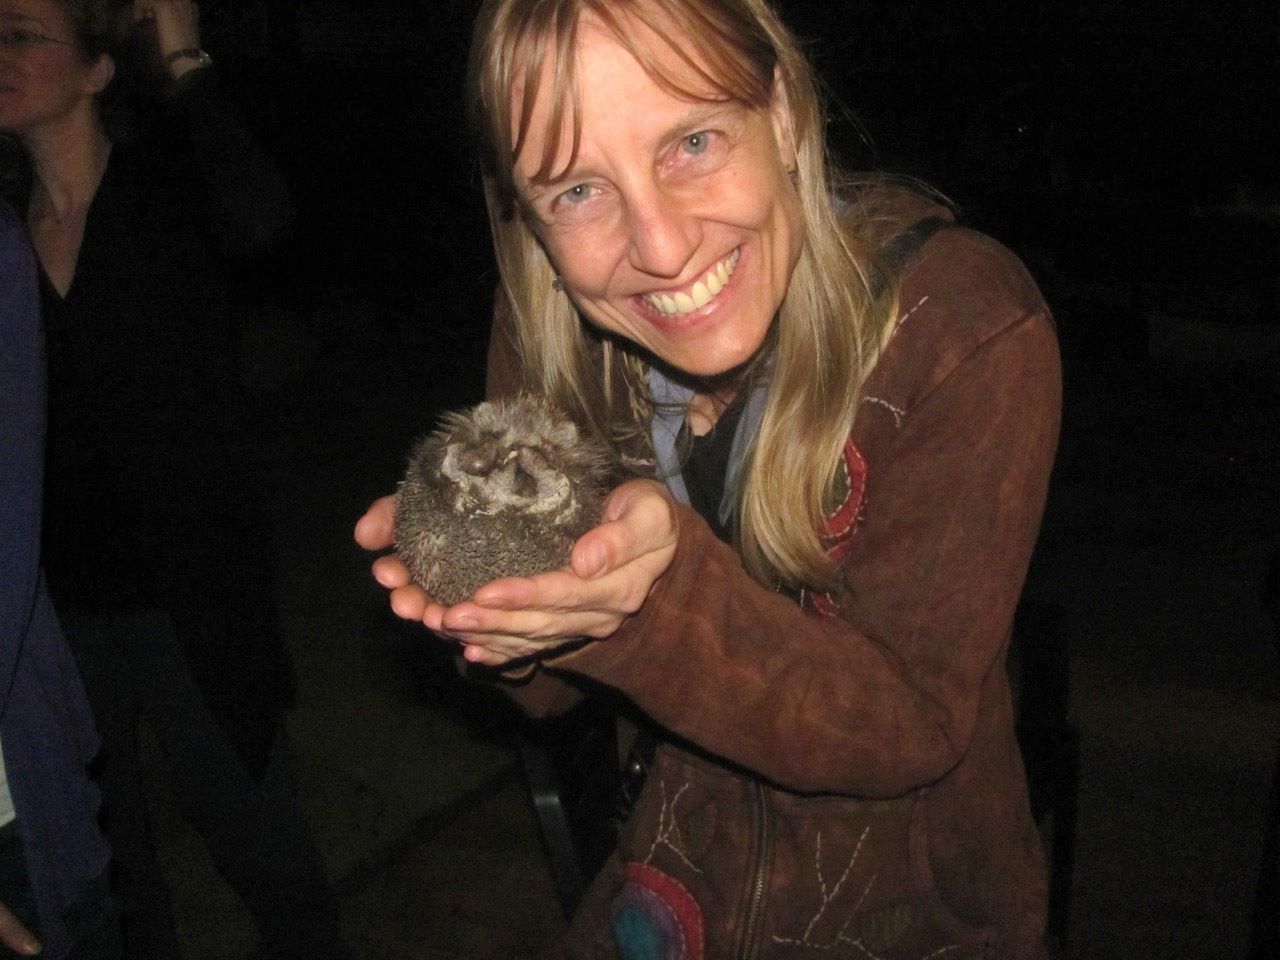 Karen holding an Israeli hedgehog